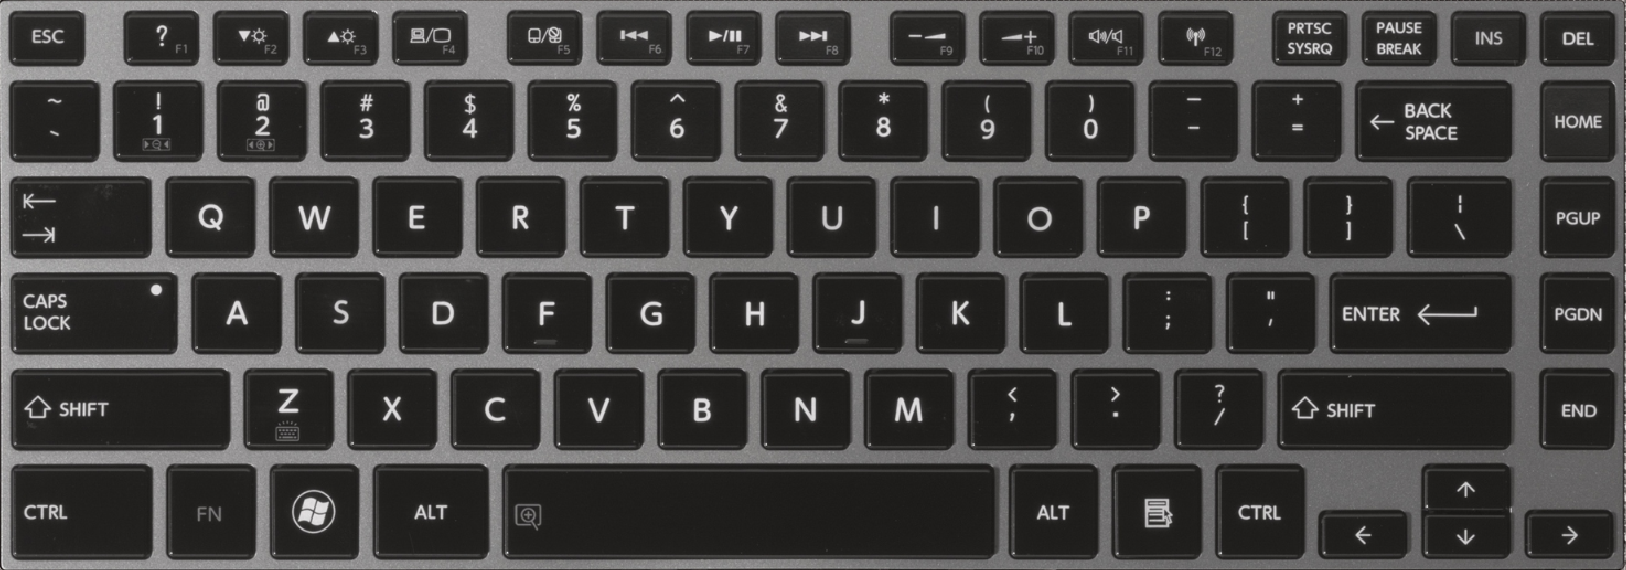 Toshiba P840 Laptop keyboard key